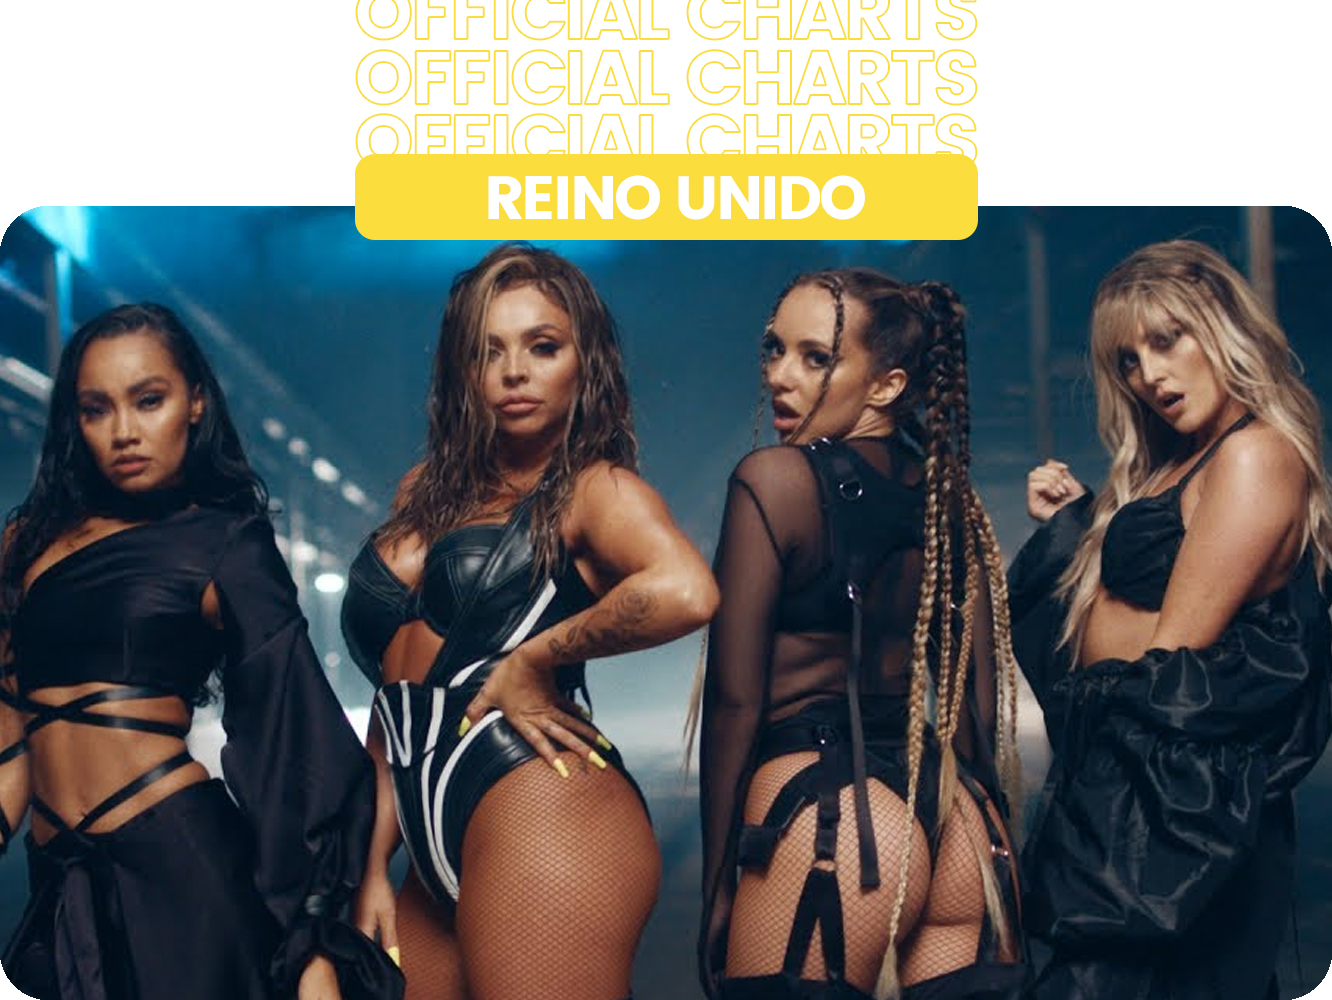  Little Mix consiguen el mejor peak de la era ‘Confetti’ con ‘Sweet Melody’